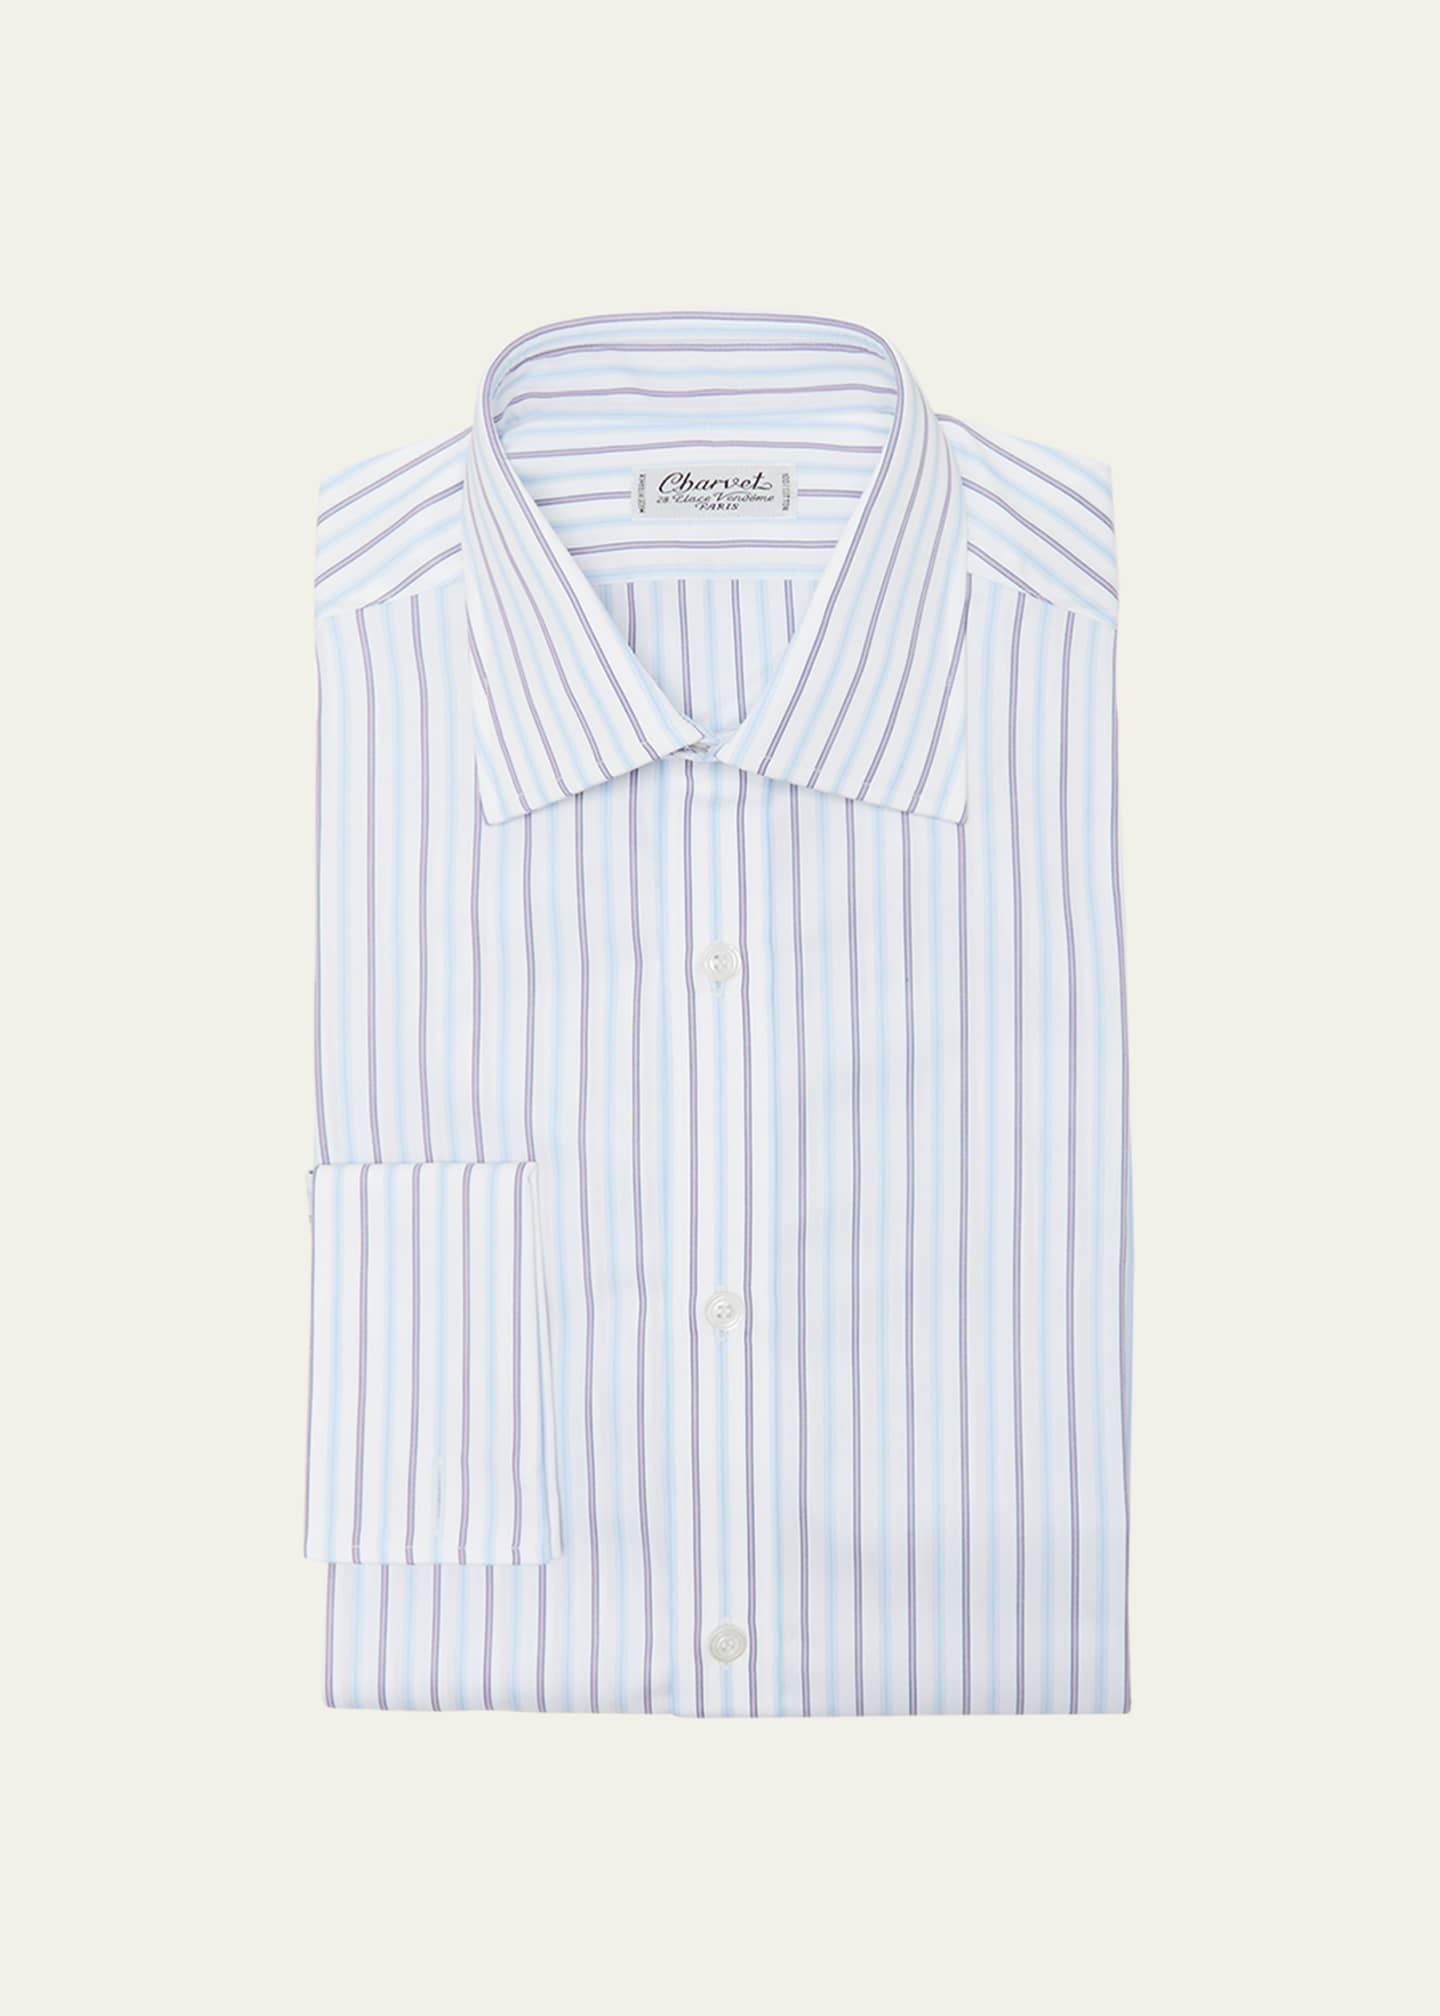 Charvet Men's Cotton Stripe Dress Shirt - Bergdorf Goodman